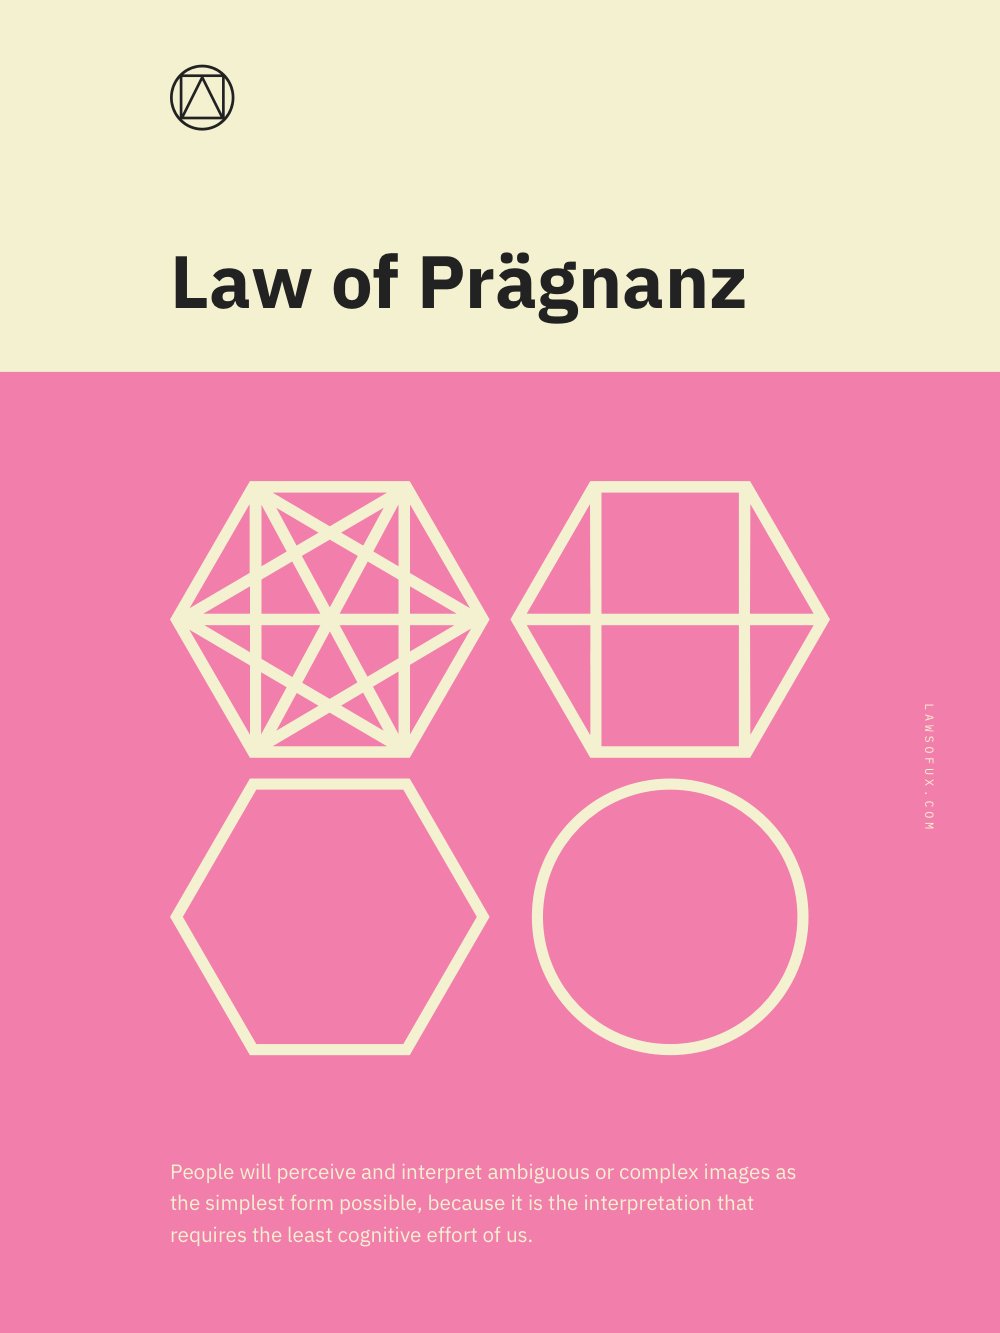 Law of Prägnanz Poster